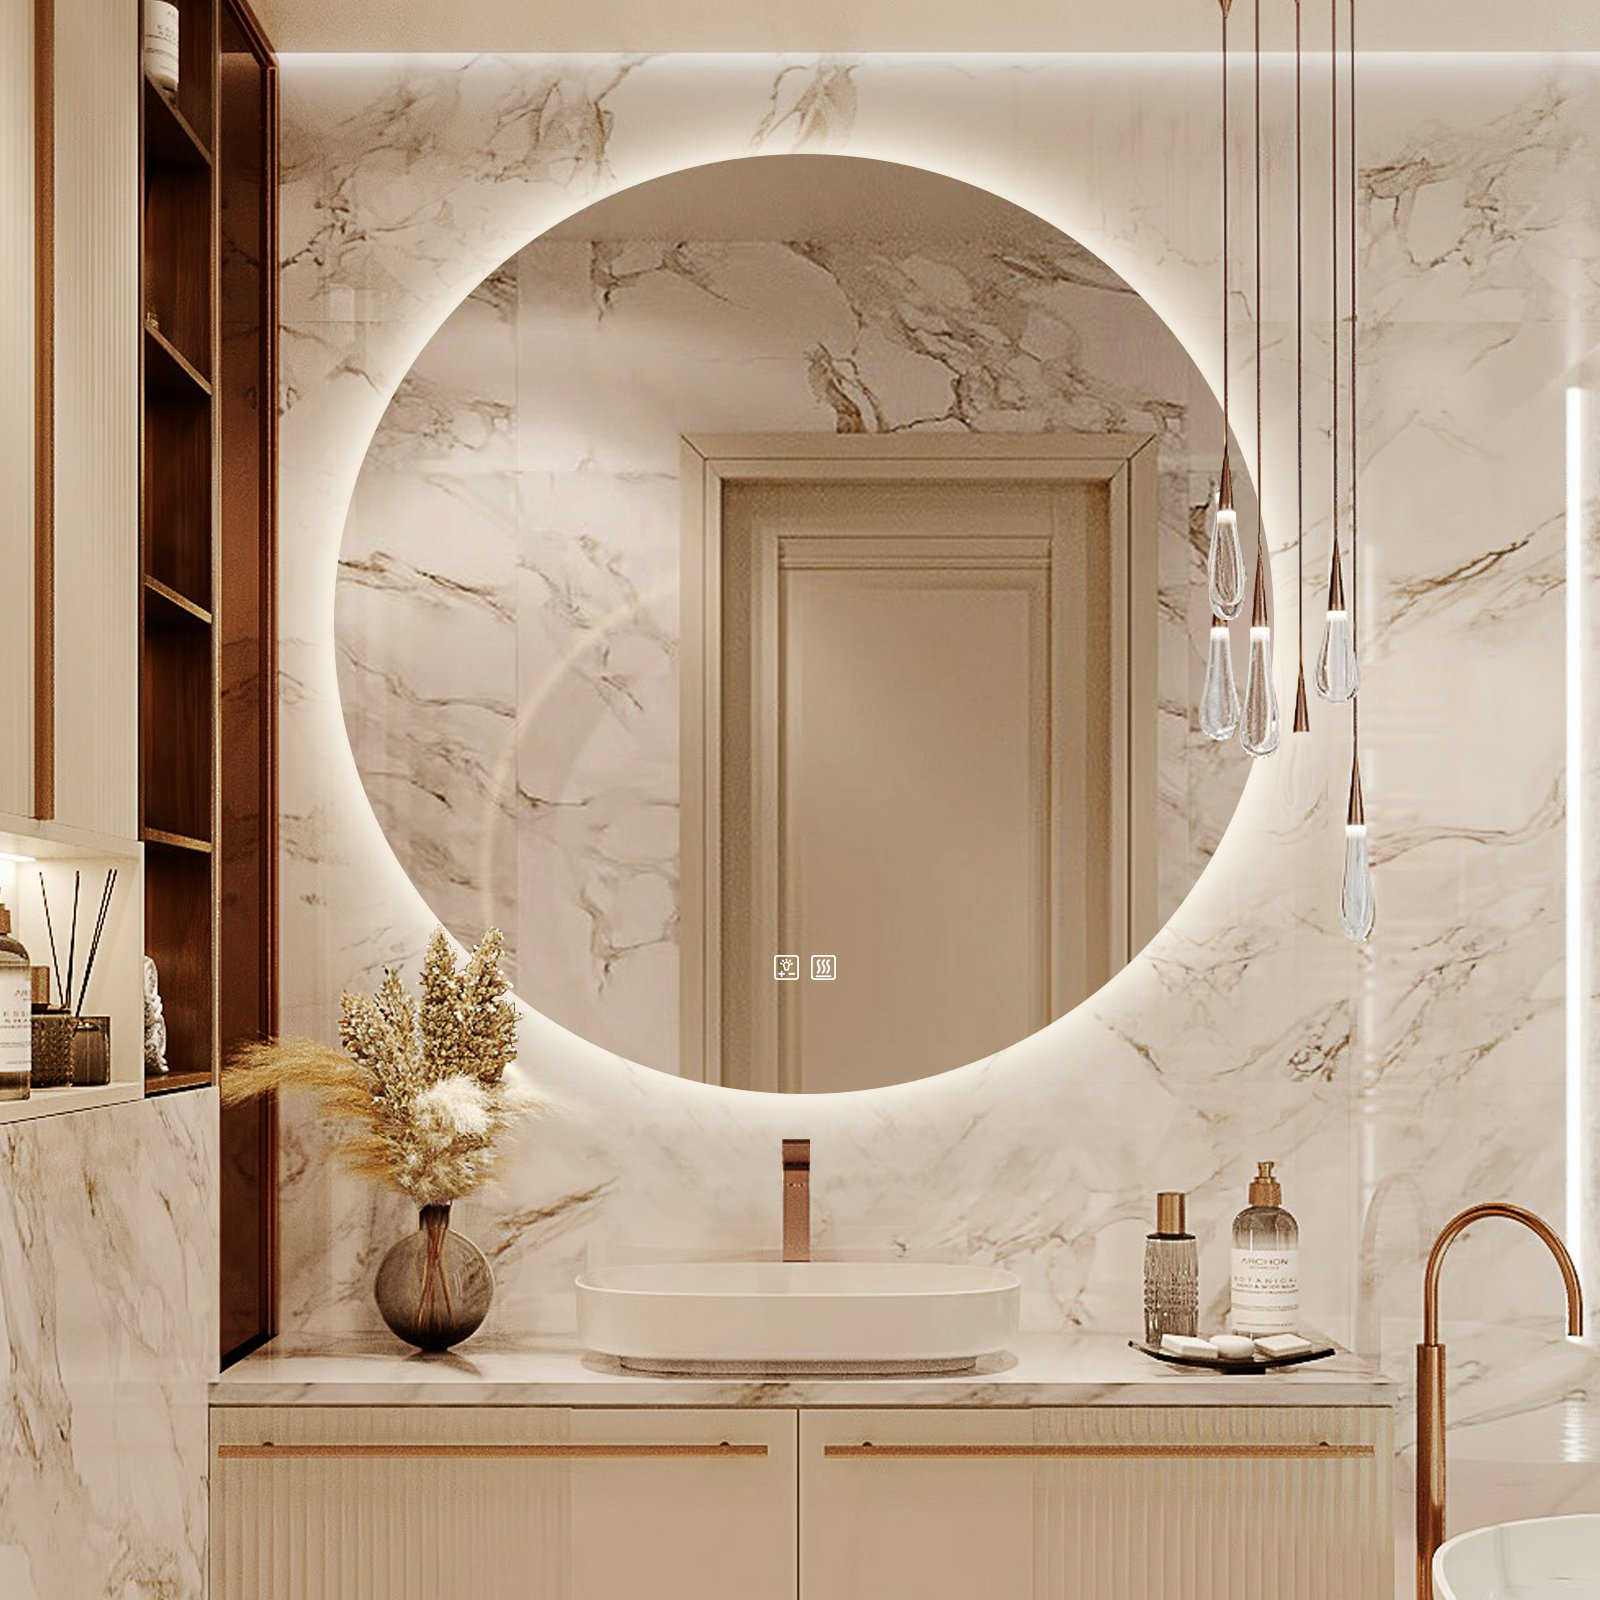 Lv Luxury Type 8 Shower Curtain Waterproof Luxury Bathroom Mat Set